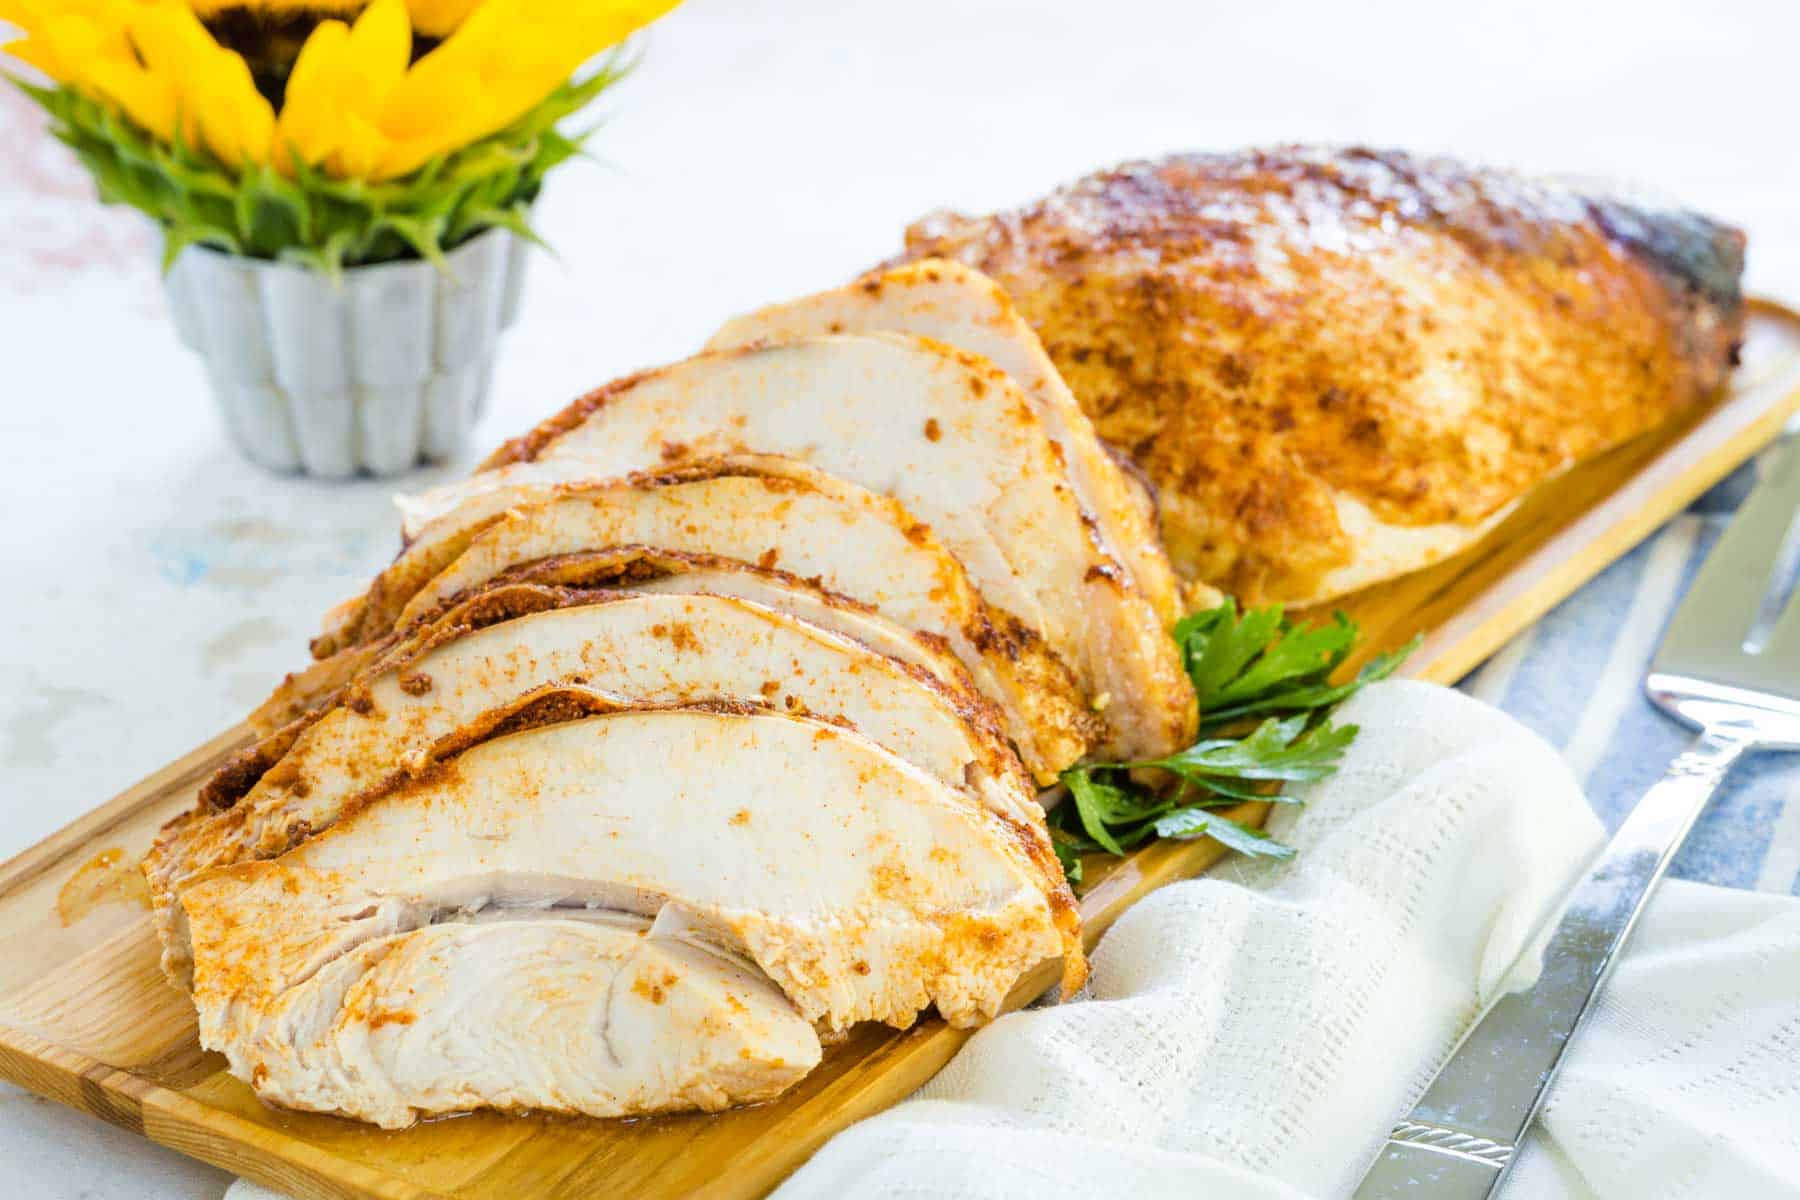 A sliced turkey breast coated with seasoning on a cutting board.